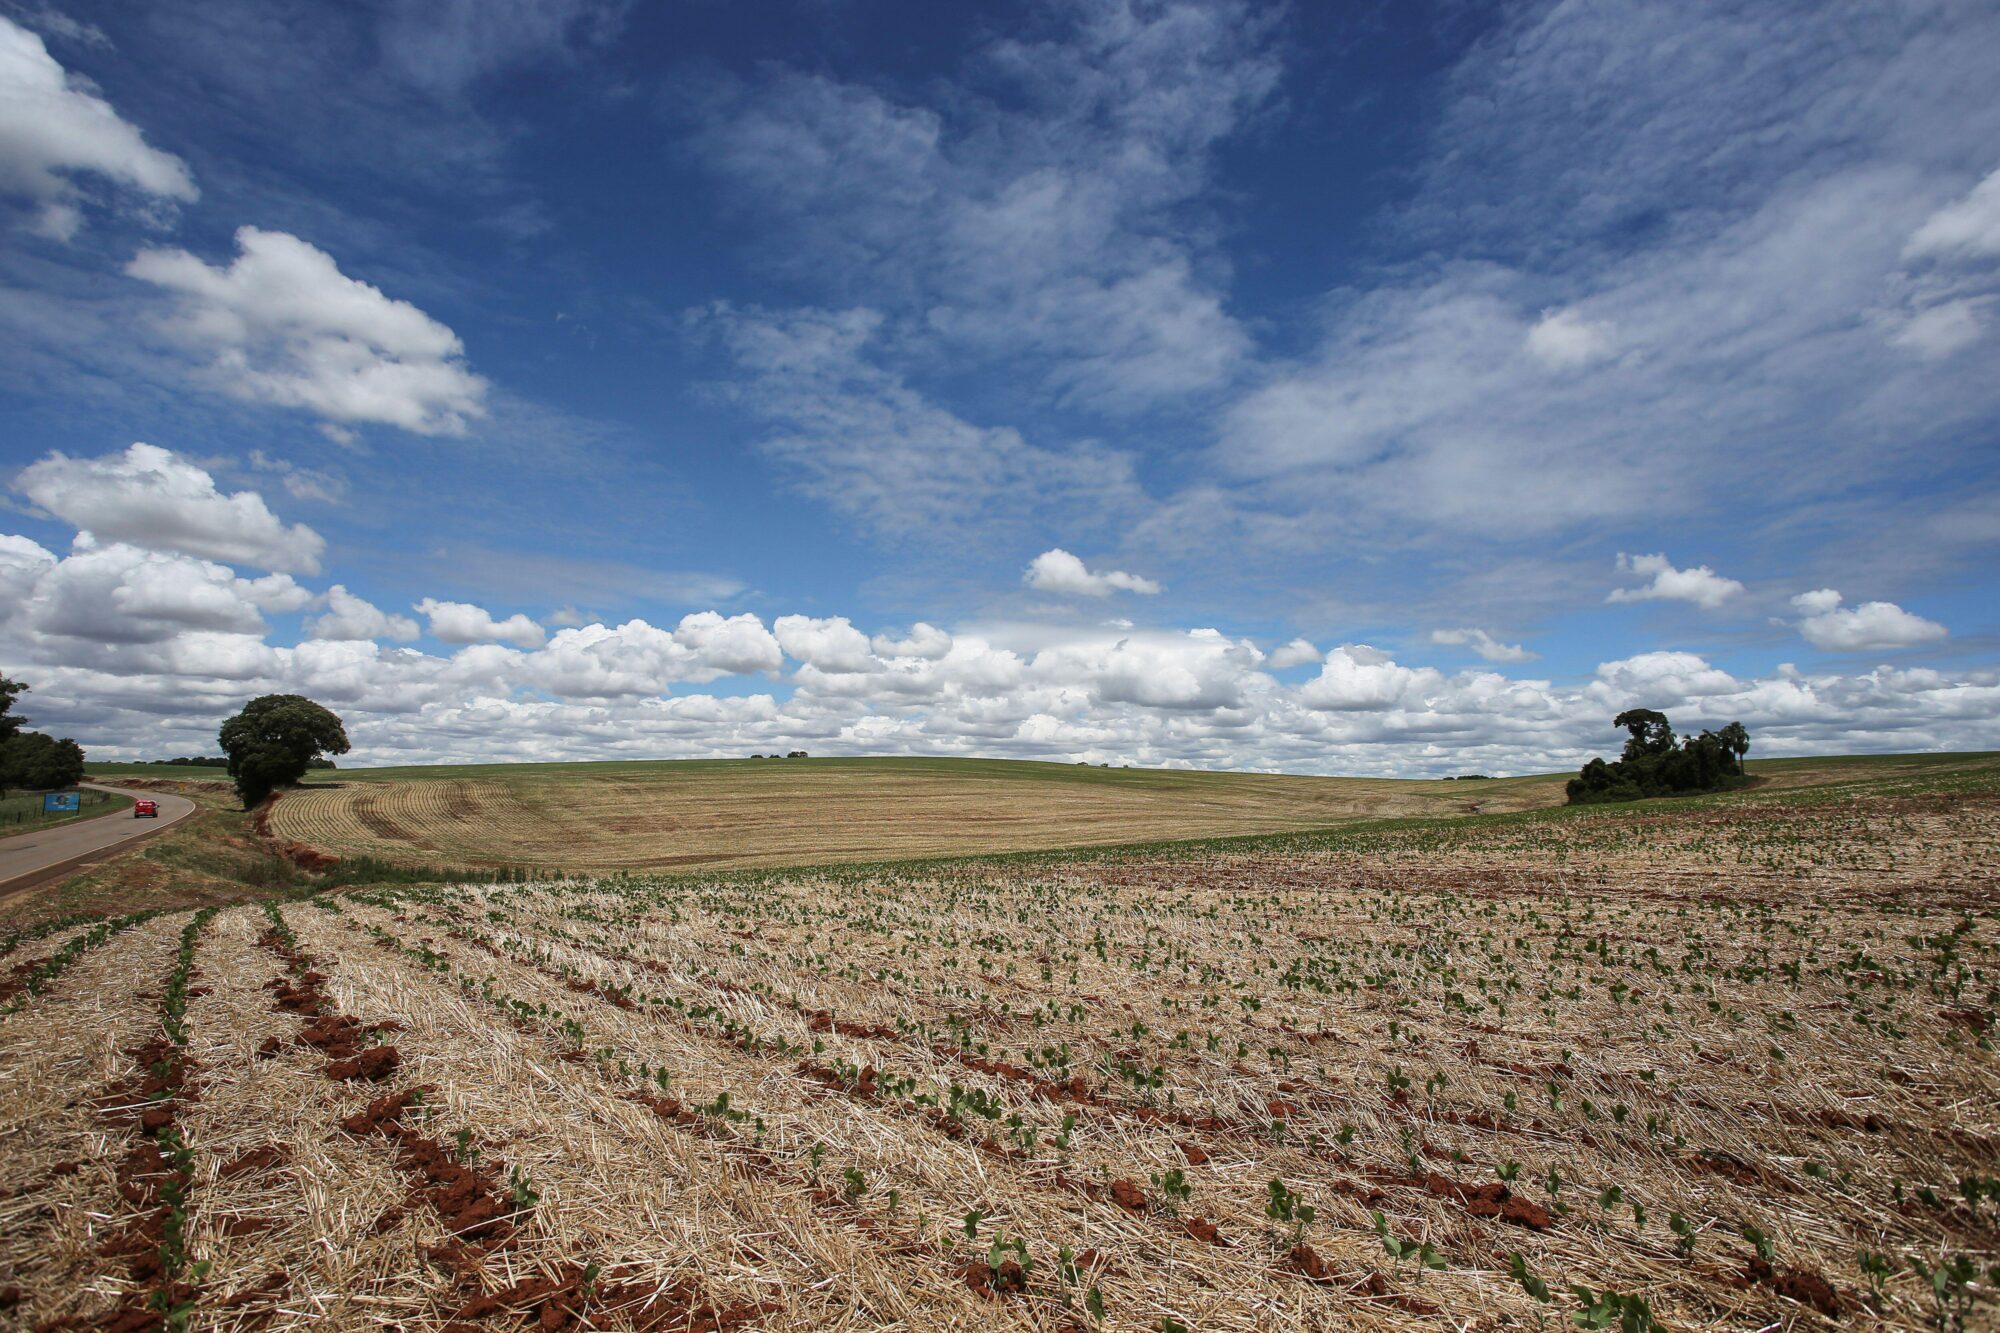 drought-affected soybean plantation in Rio Grande do Sul, Brazil